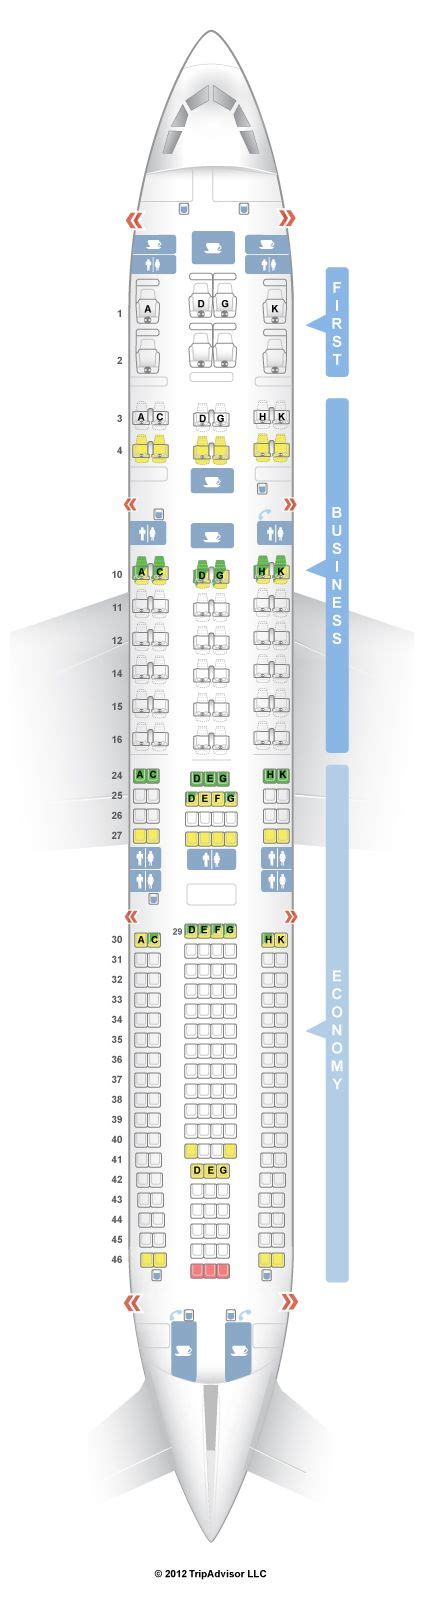 Seatguru Seat Map Lufthansa Airbus A330 300 333 V2 Seatguru